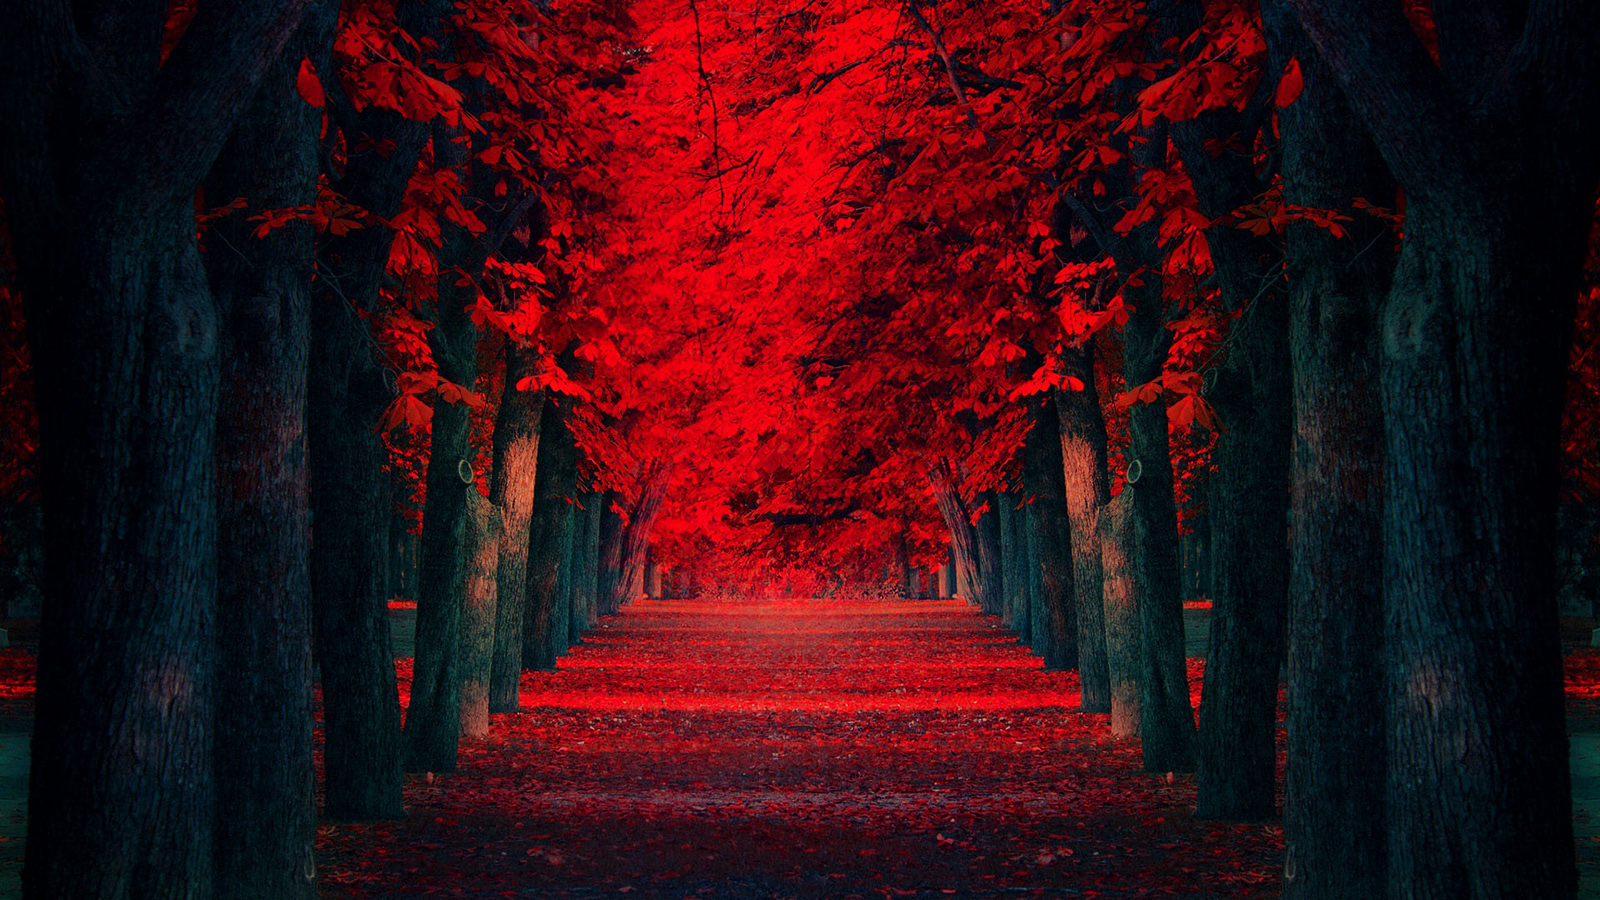 Red HD Wallpaper